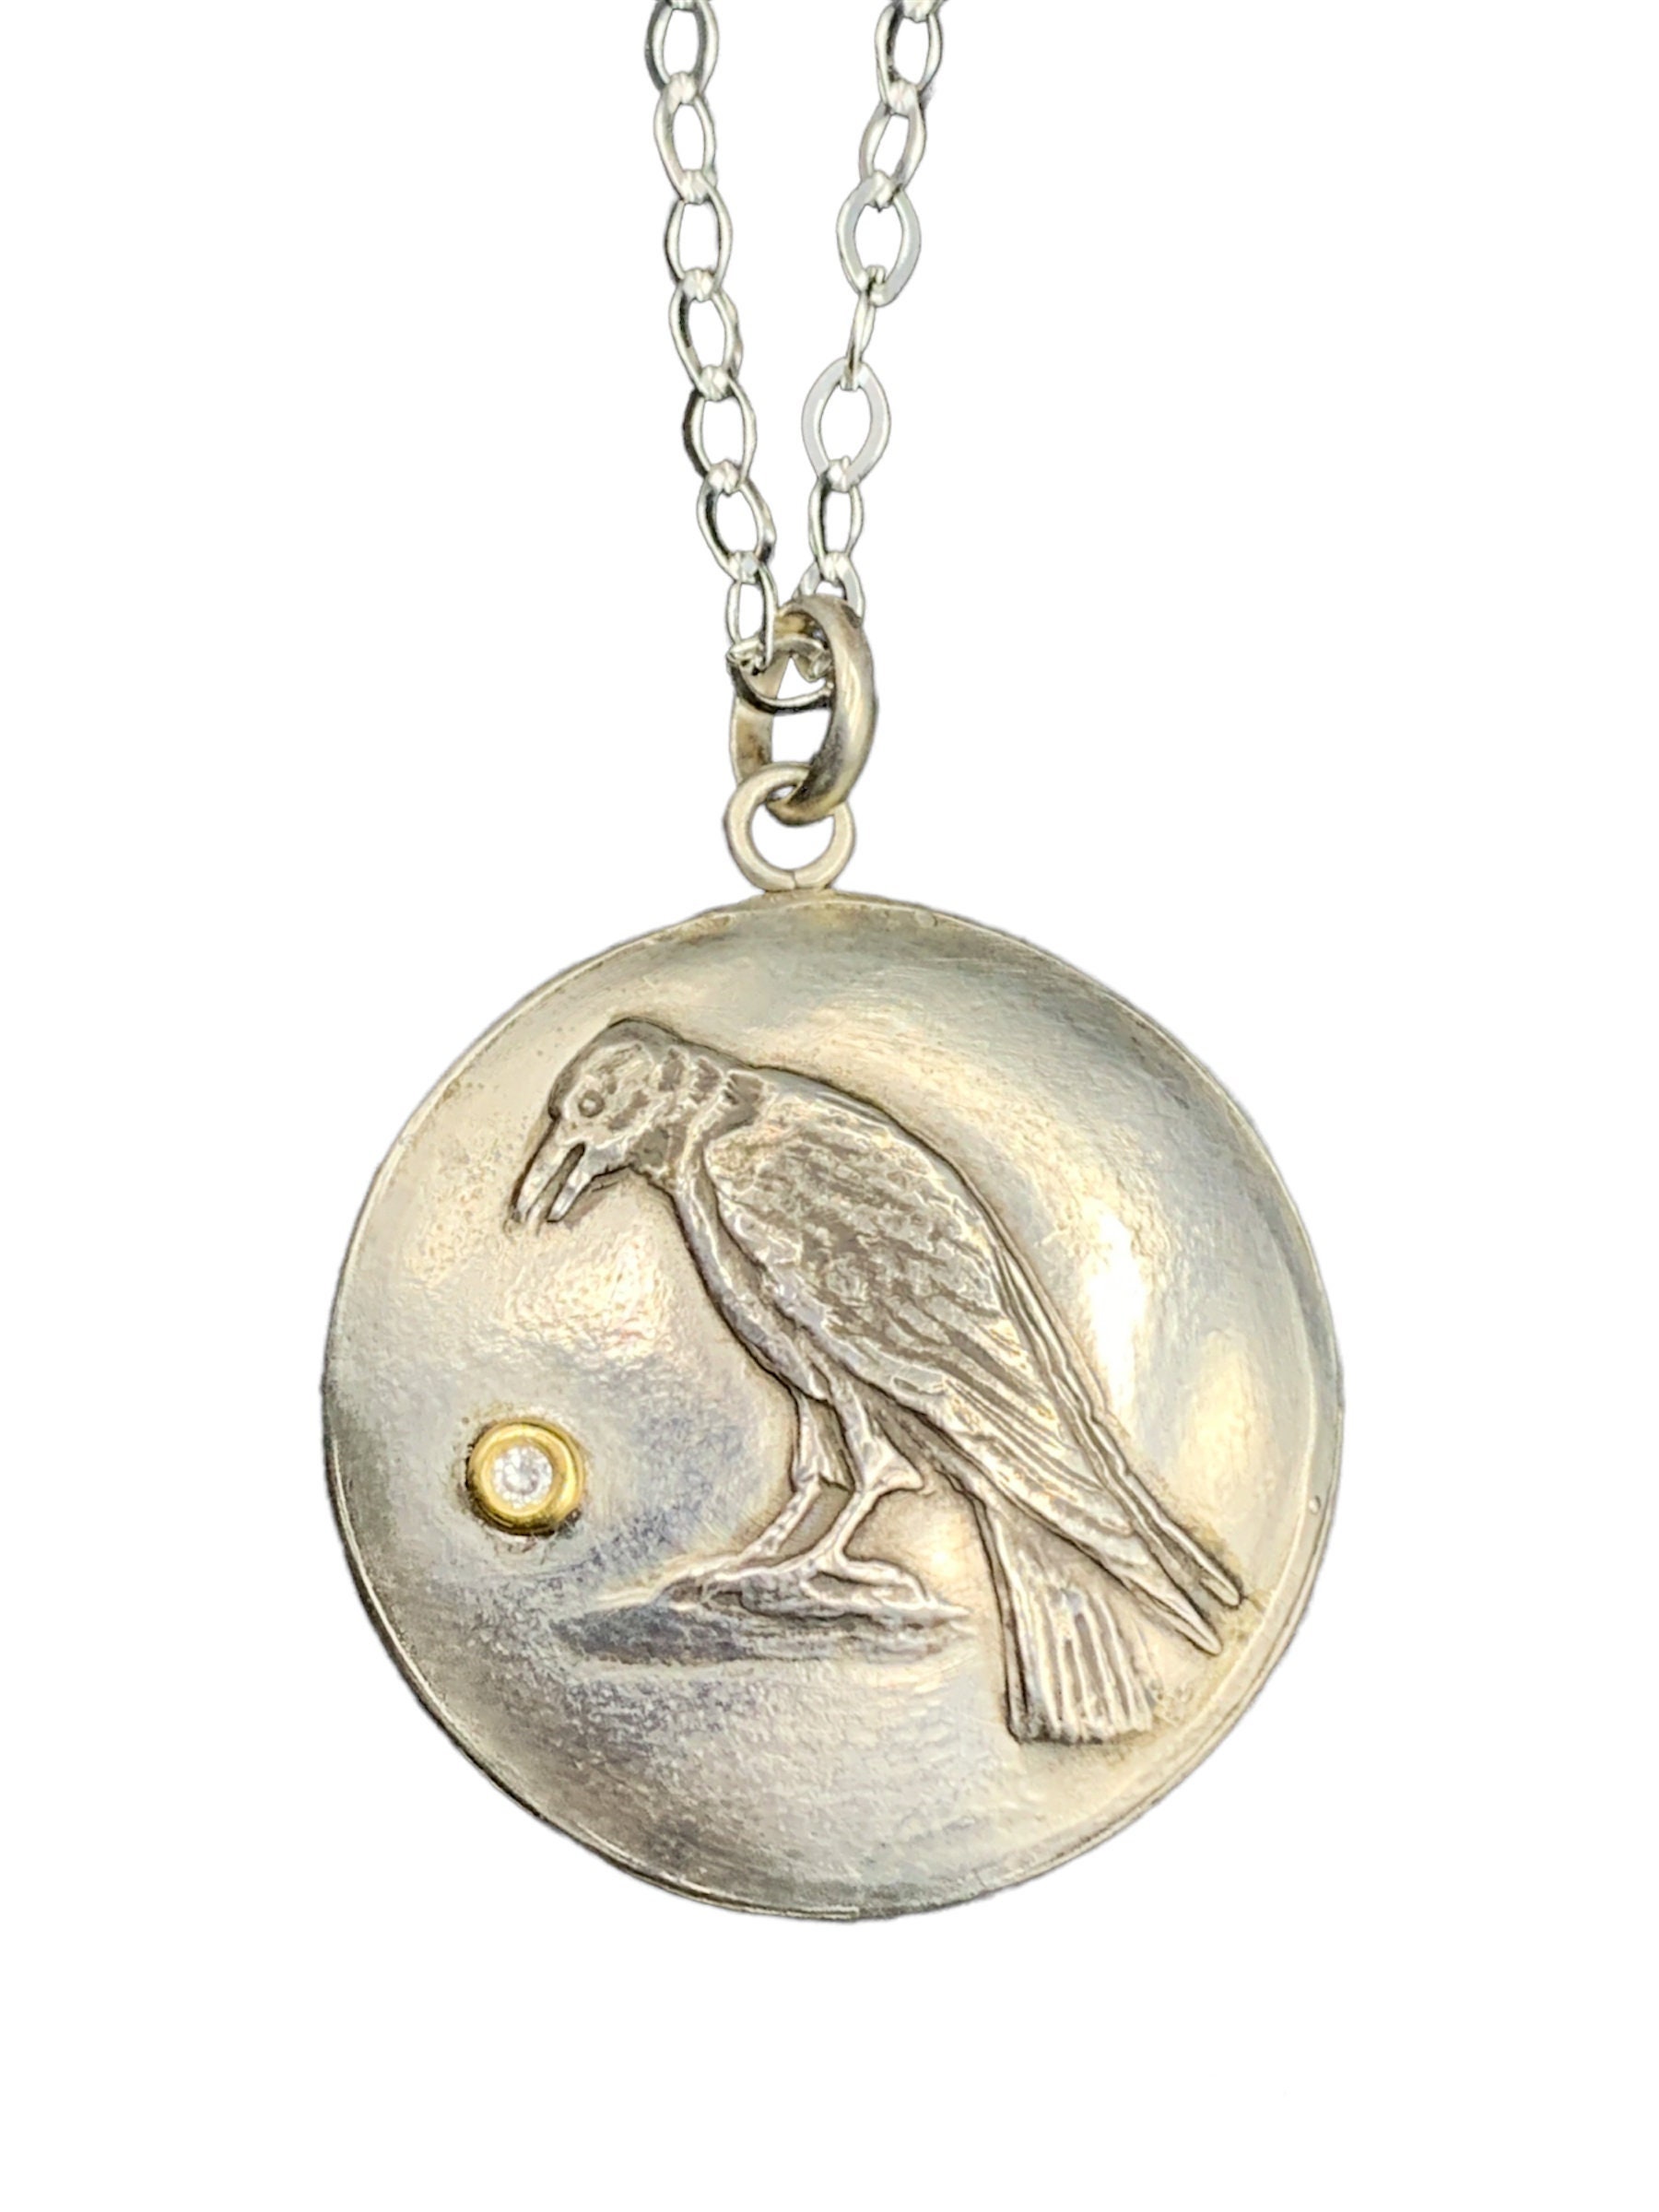 50 Silver Raven Charms, Bulk Metal Animal Bird Pendants